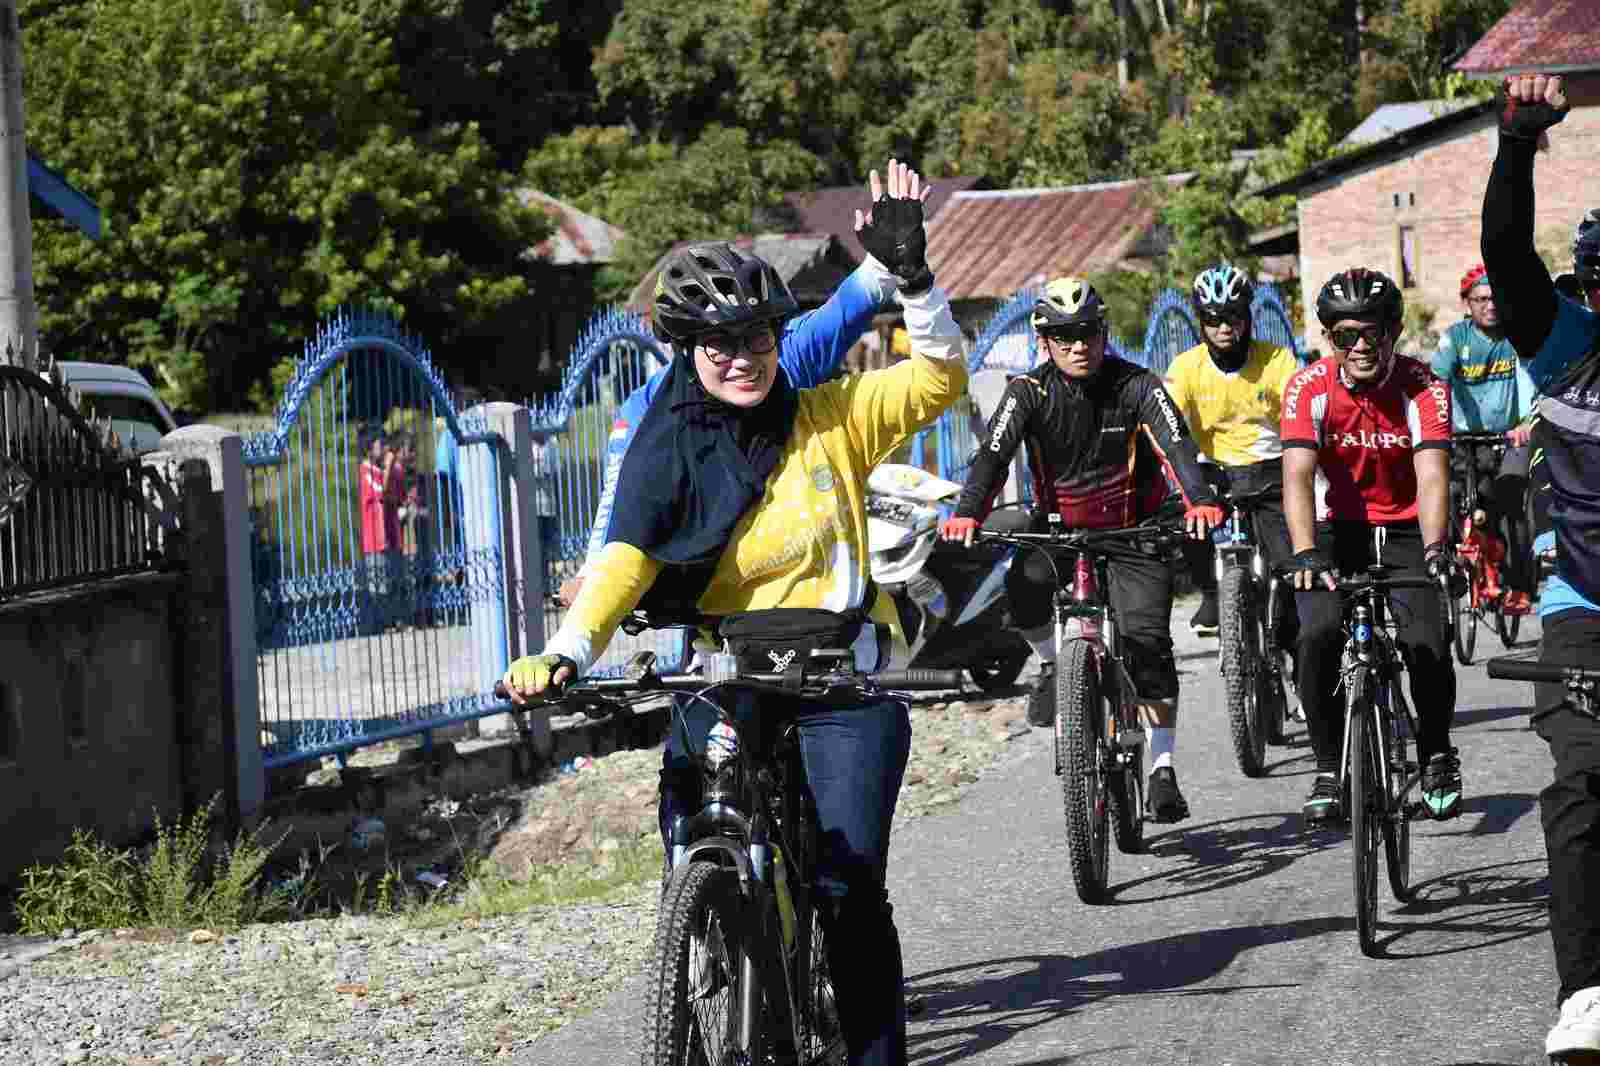 Golkar Luwu Utara menggelar event sepeda santai